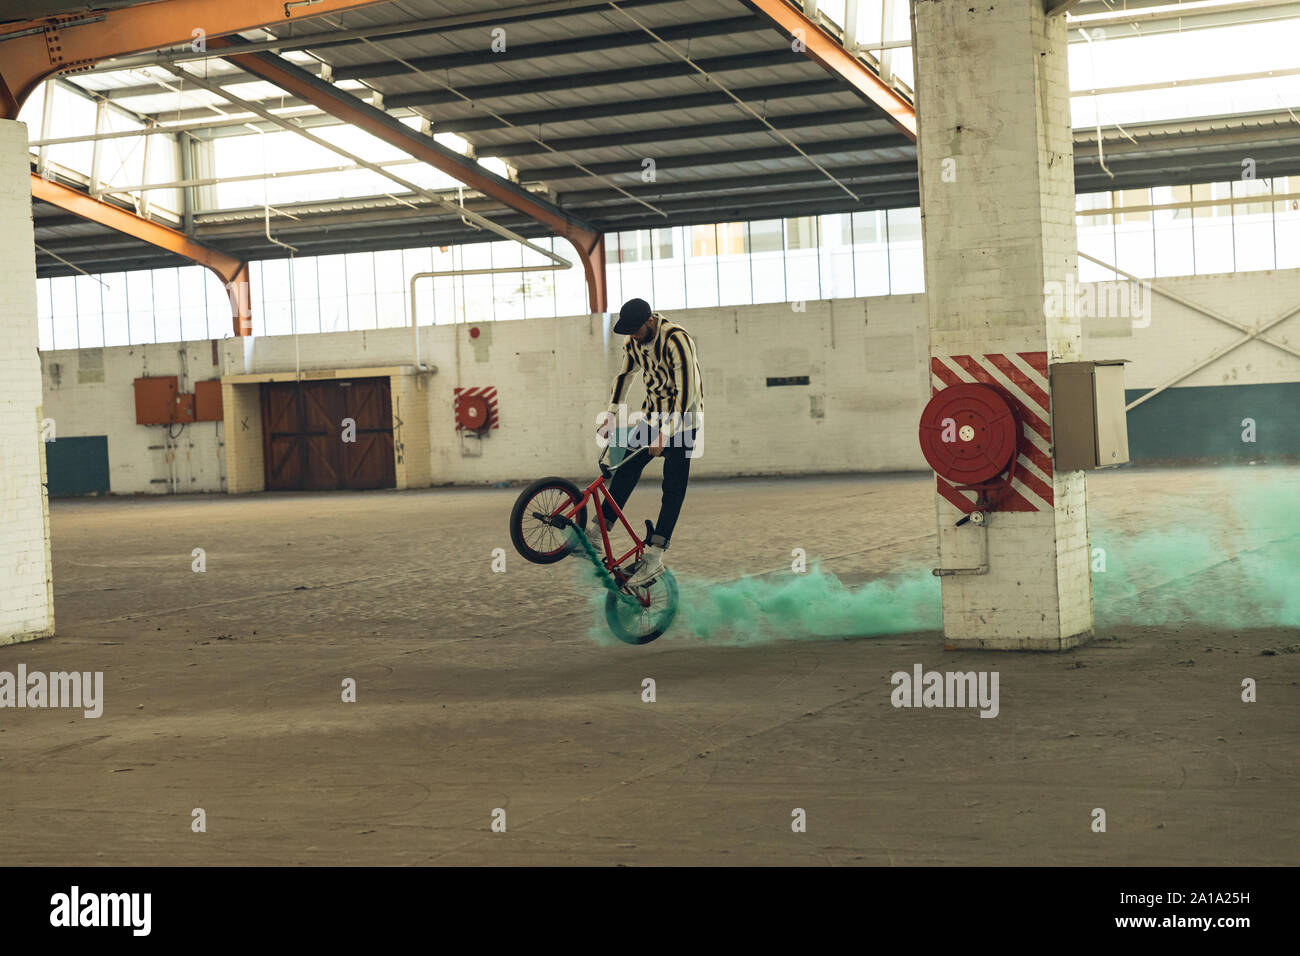 BMX rider in an empty warehouse using smoke grenade Stock Photo